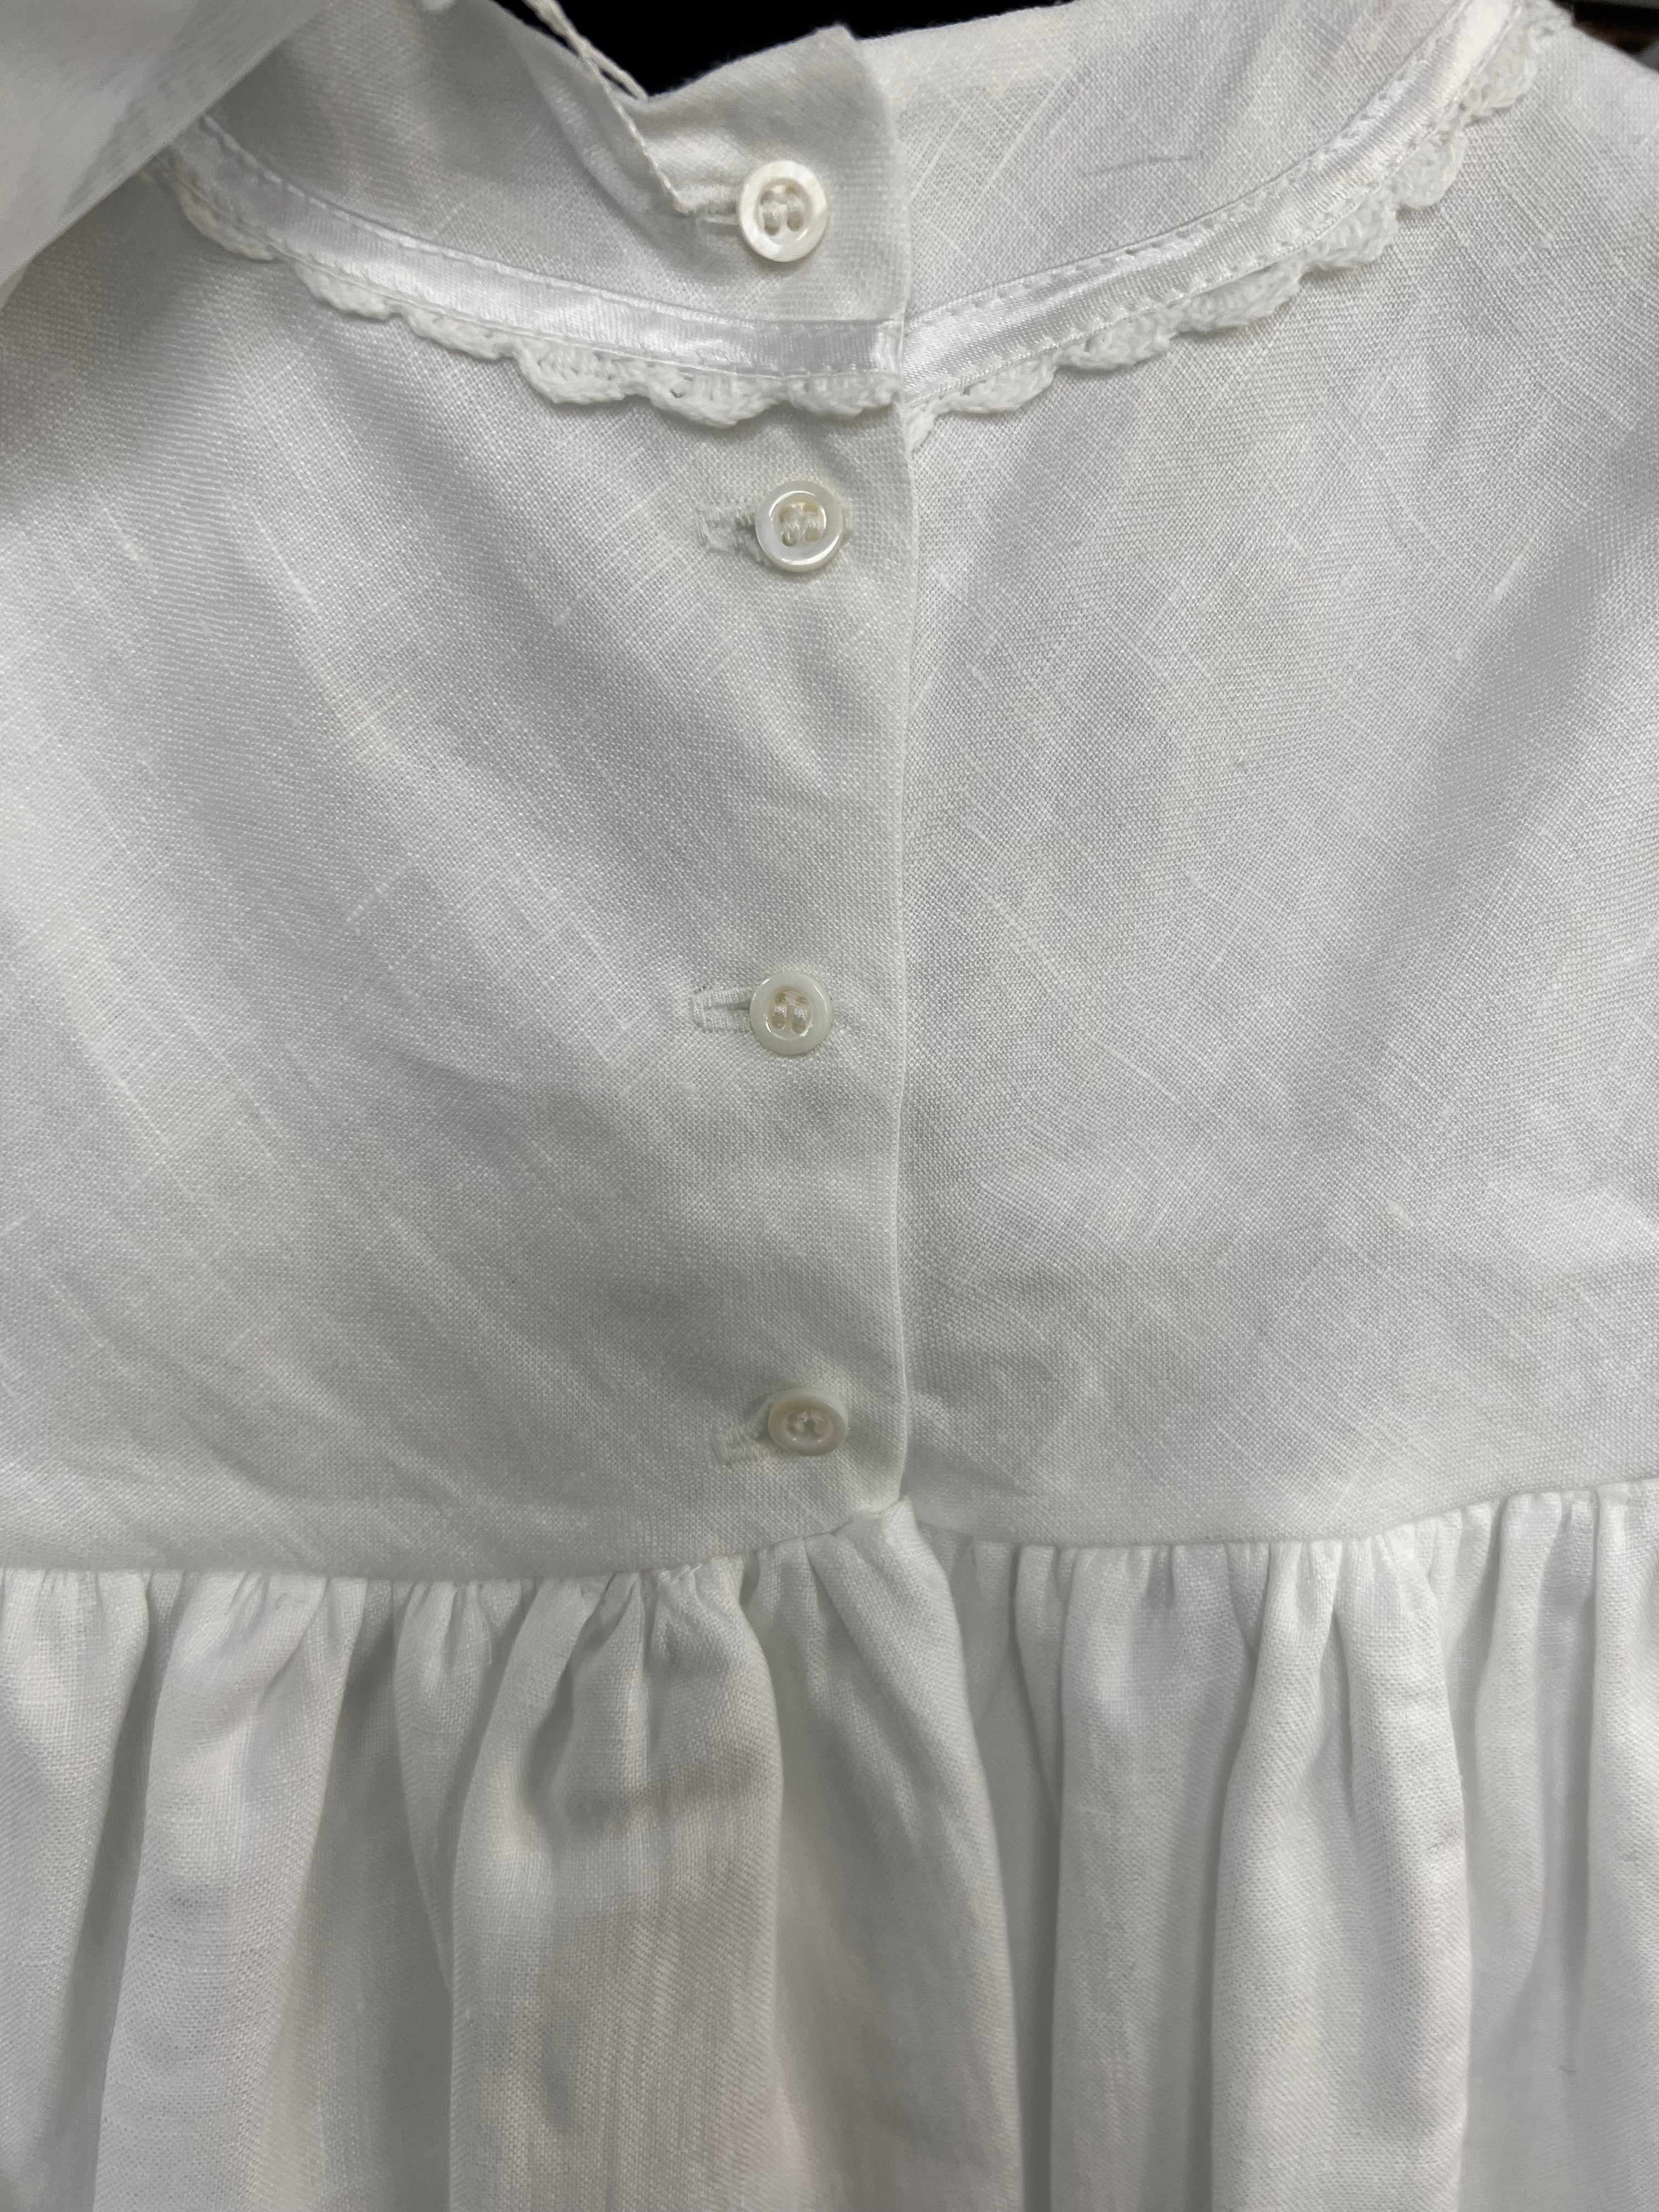 100% Irish Linen Christening Gown By Laura D Designs 1102